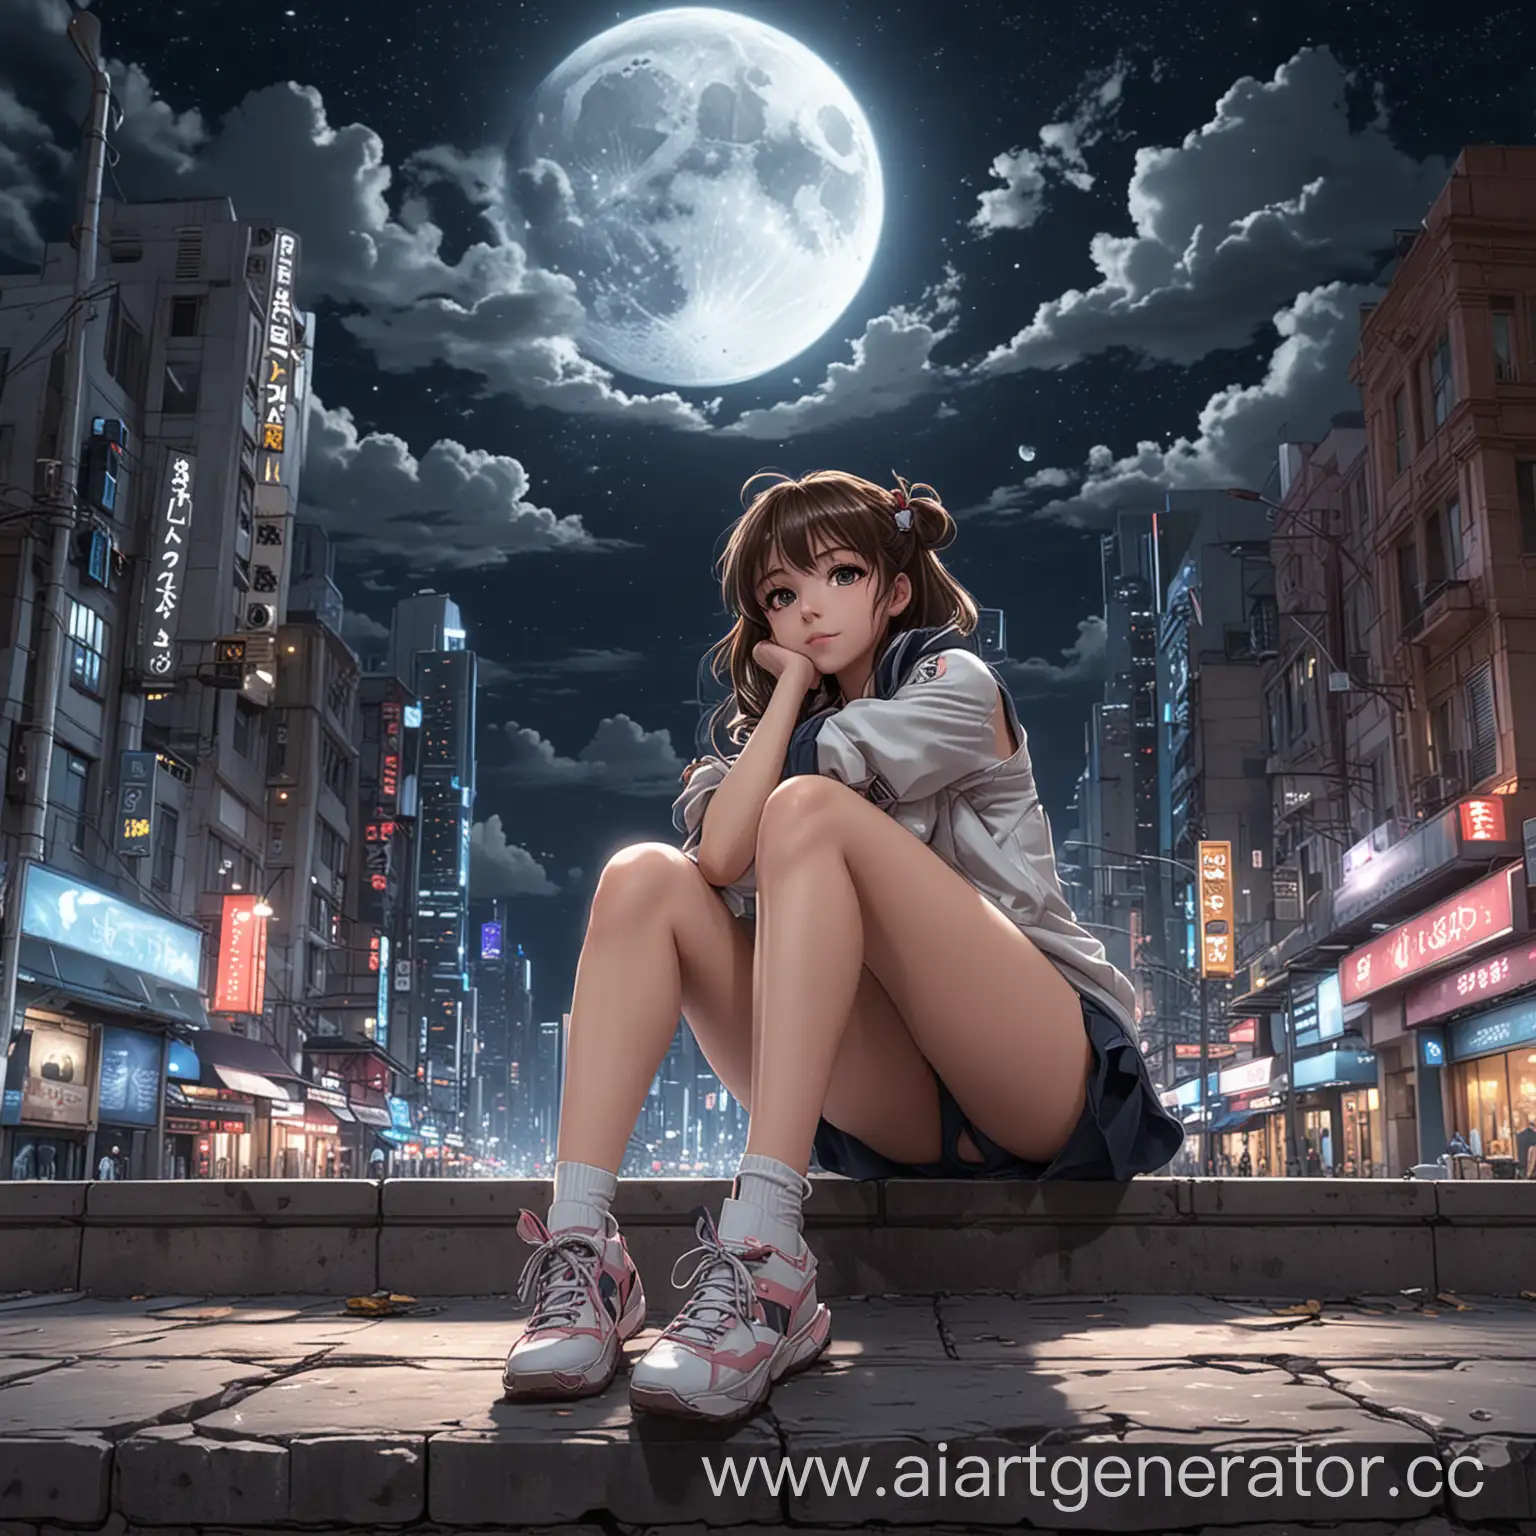 Anime-Girl-Brunette-Sitting-in-Futuristic-City-Night